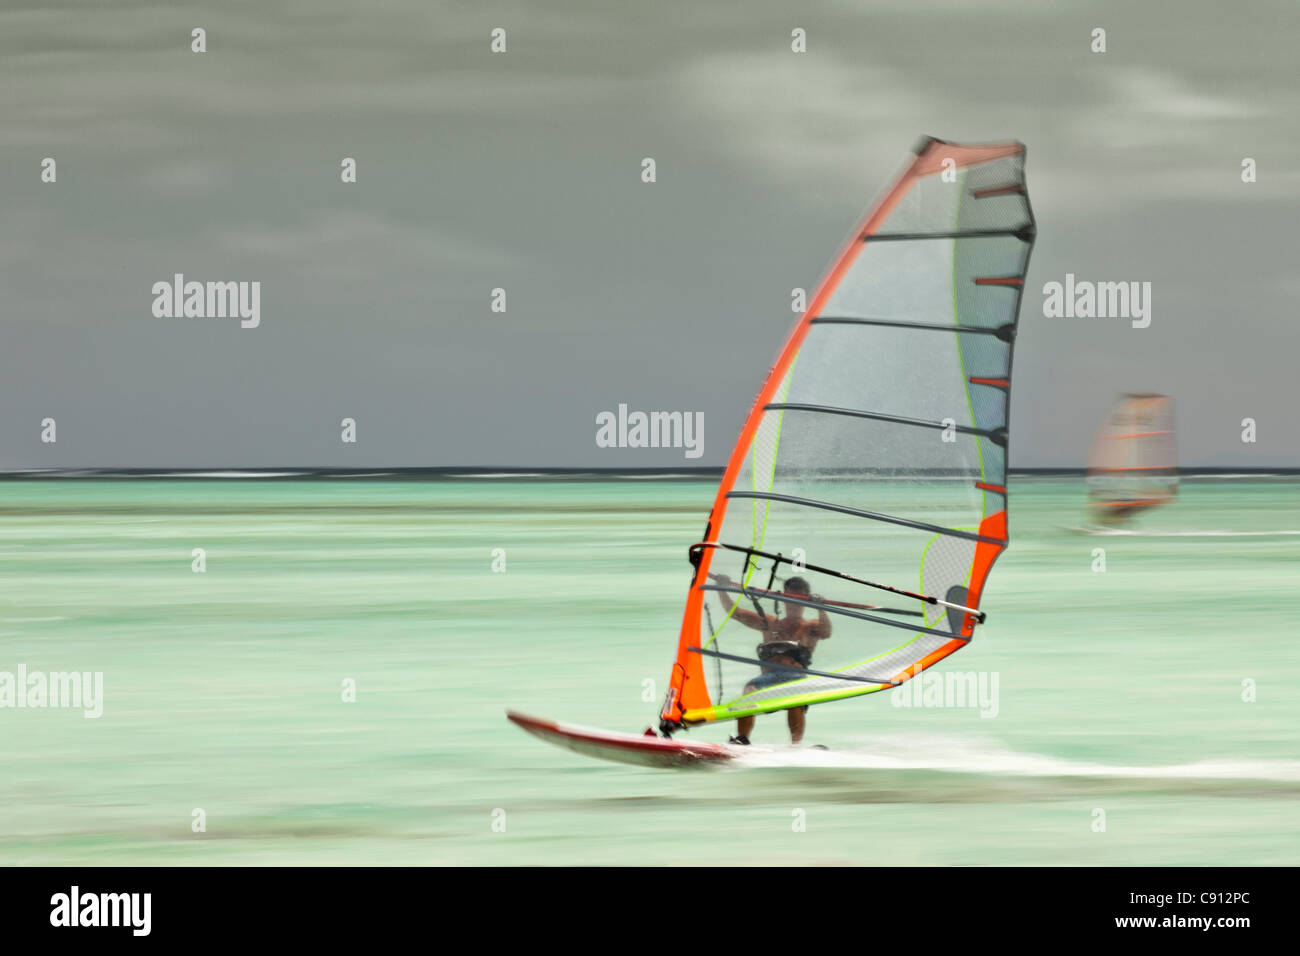 The Netherlands, Bonaire Island, Dutch Caribbean, Kralendijk, Lac Bay. Wind surfing. Blurred motion. Stock Photo